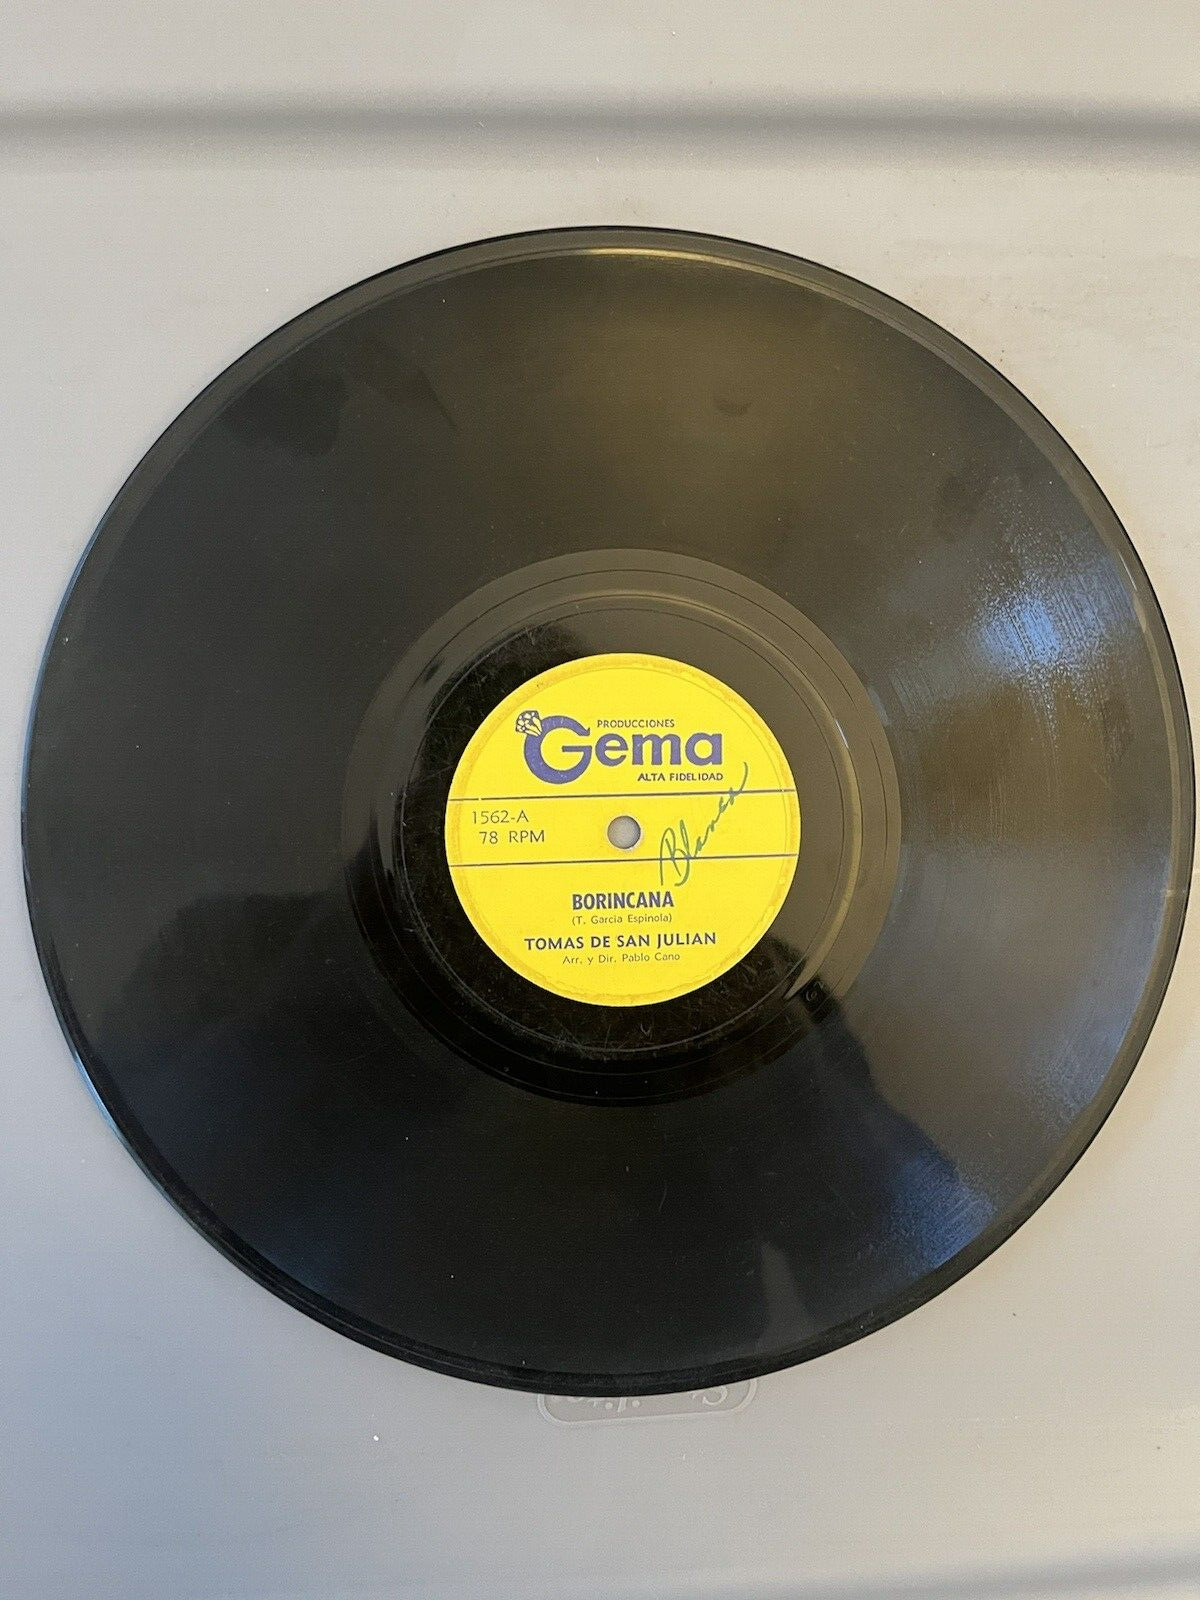 Vintage Tomas De San Julian (Dios es Testigo, Borincana) Vinyl LP78 Record